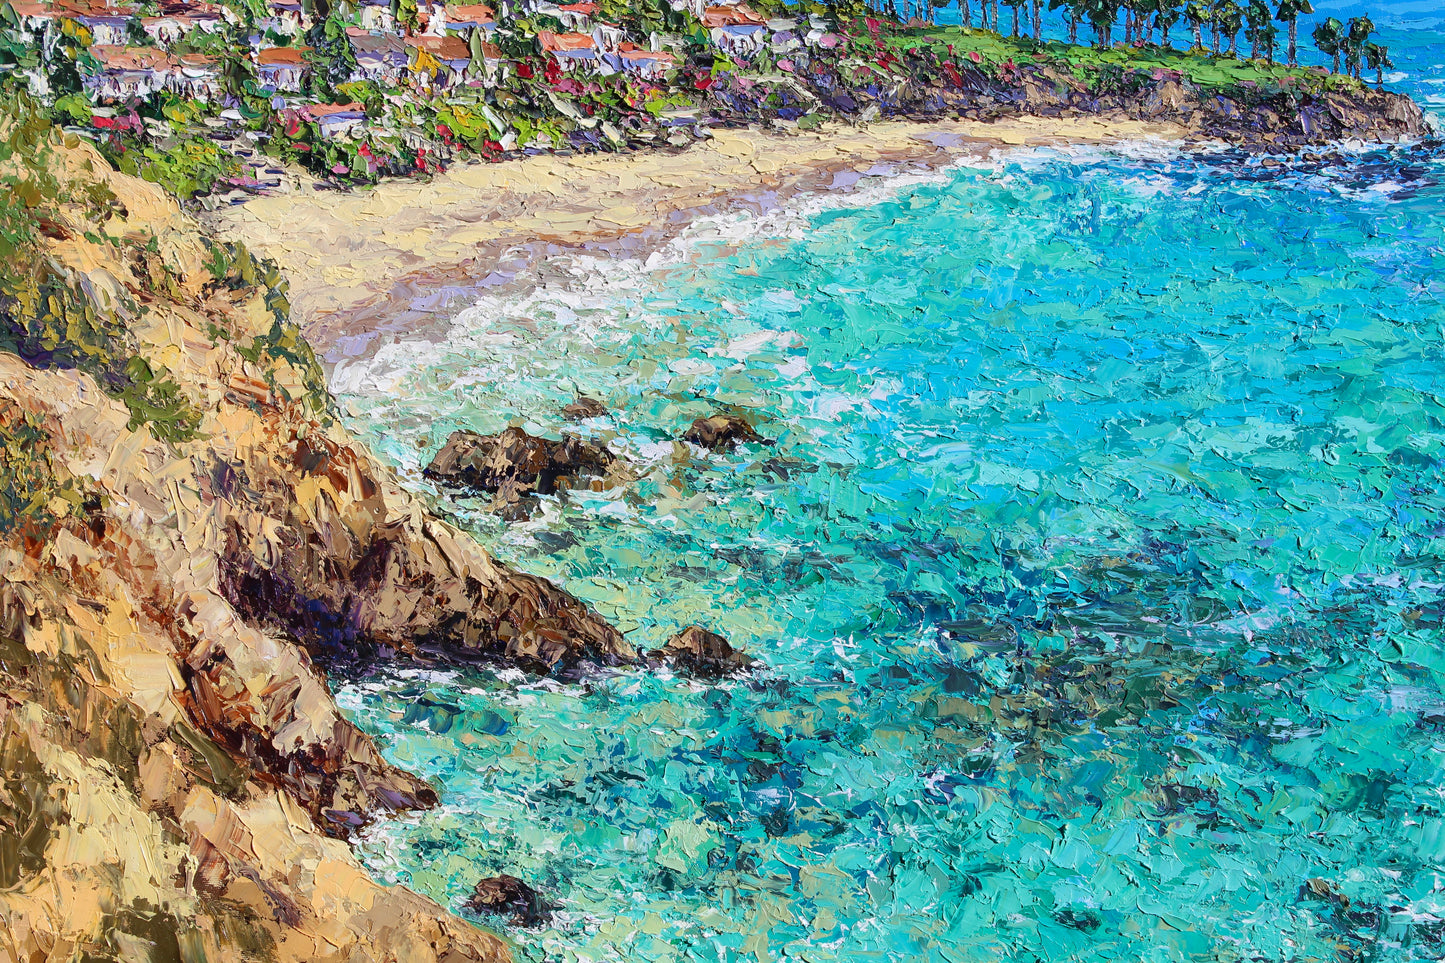 Crescent Bay Laguna Beach Original 30" x 40" Oil Painting On Canvas